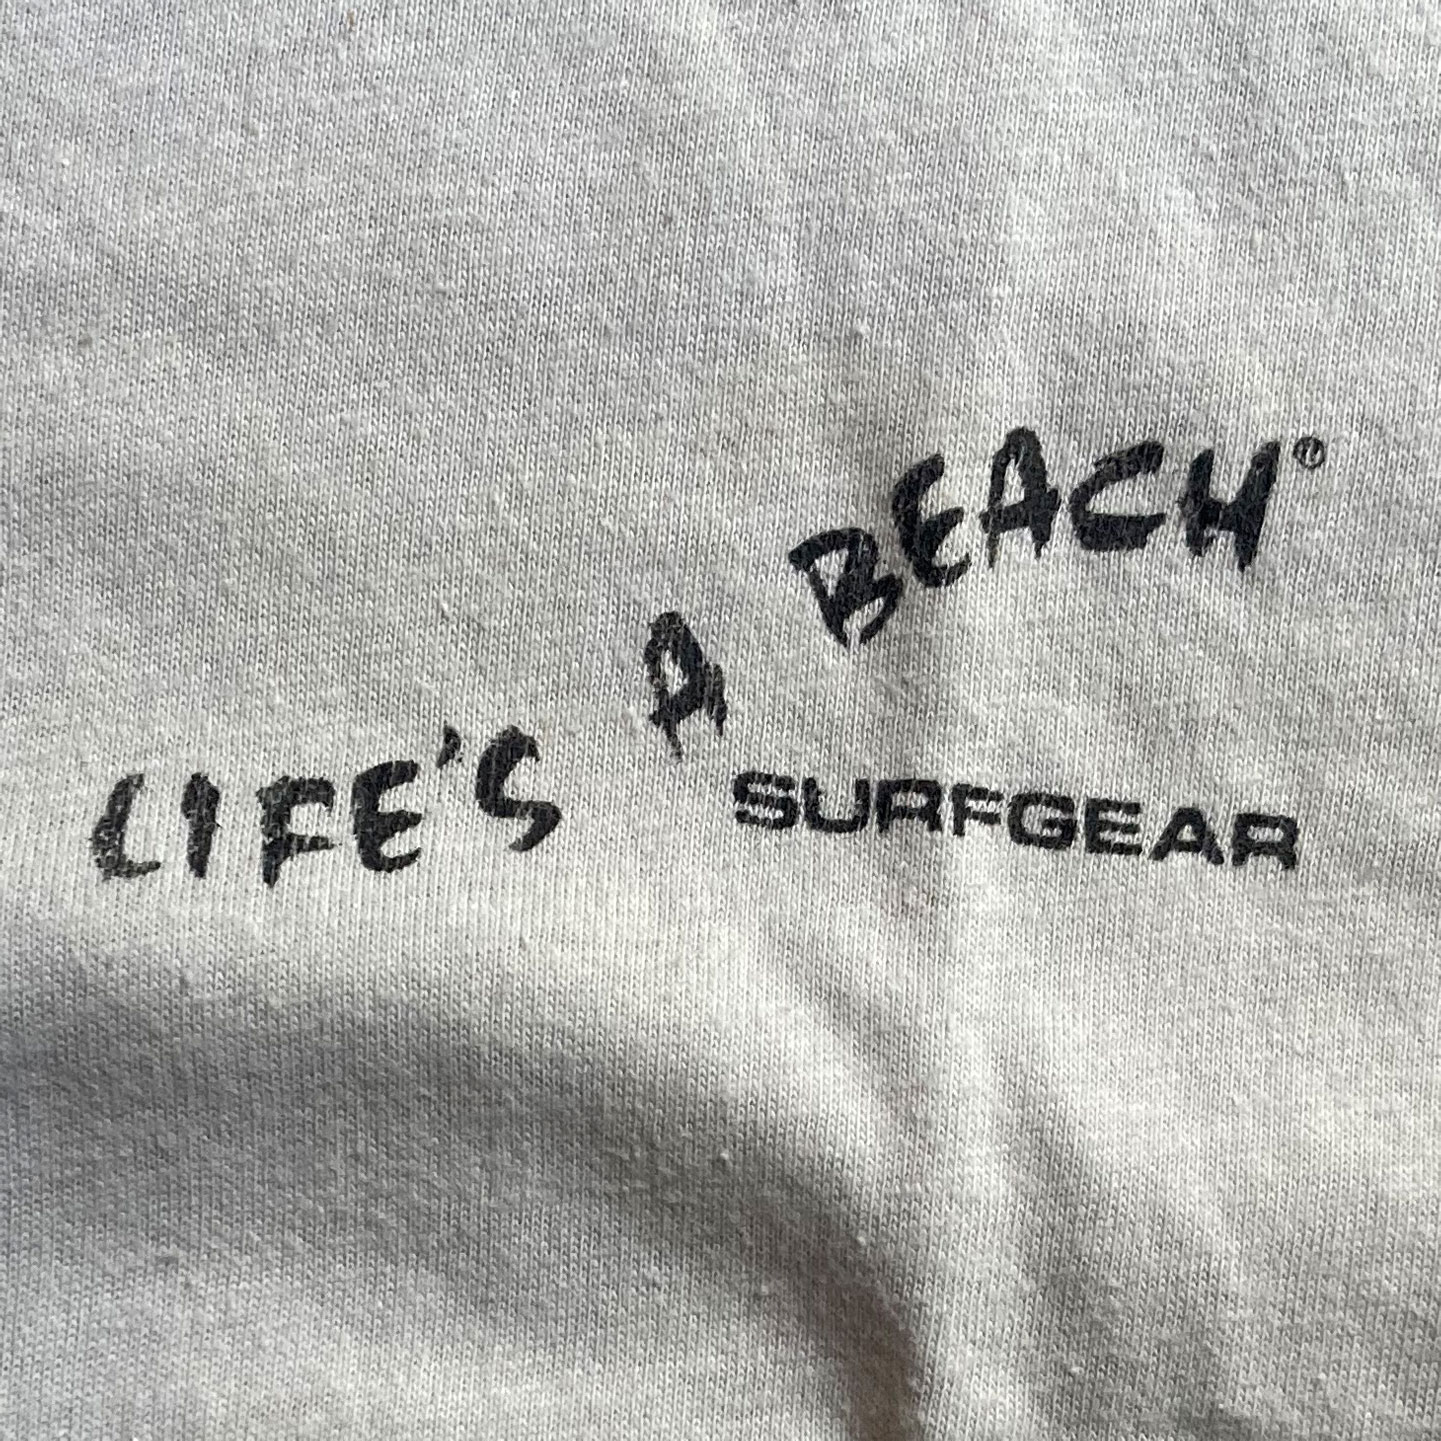 USED! LIFE'S A BEACH Tシャツ ビンテージ